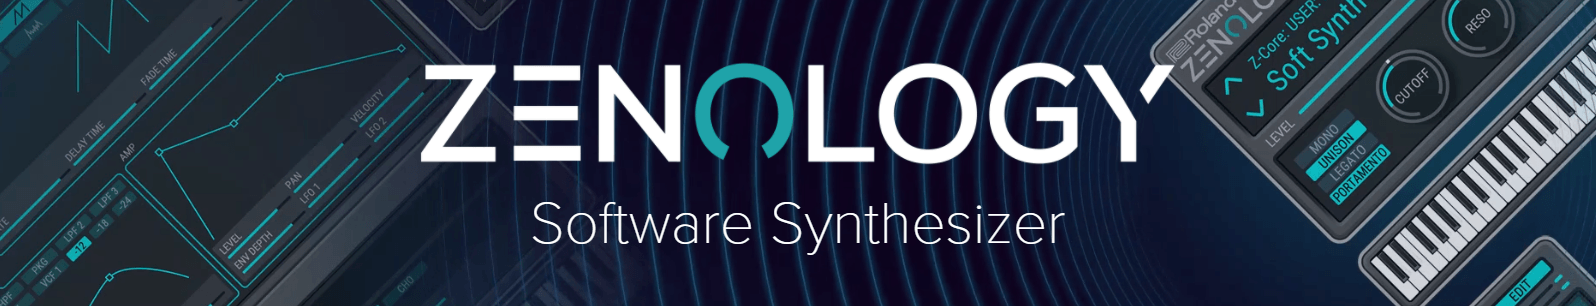 Roland Zenology Pro Advanced Software Synthesizer | Producer Tools